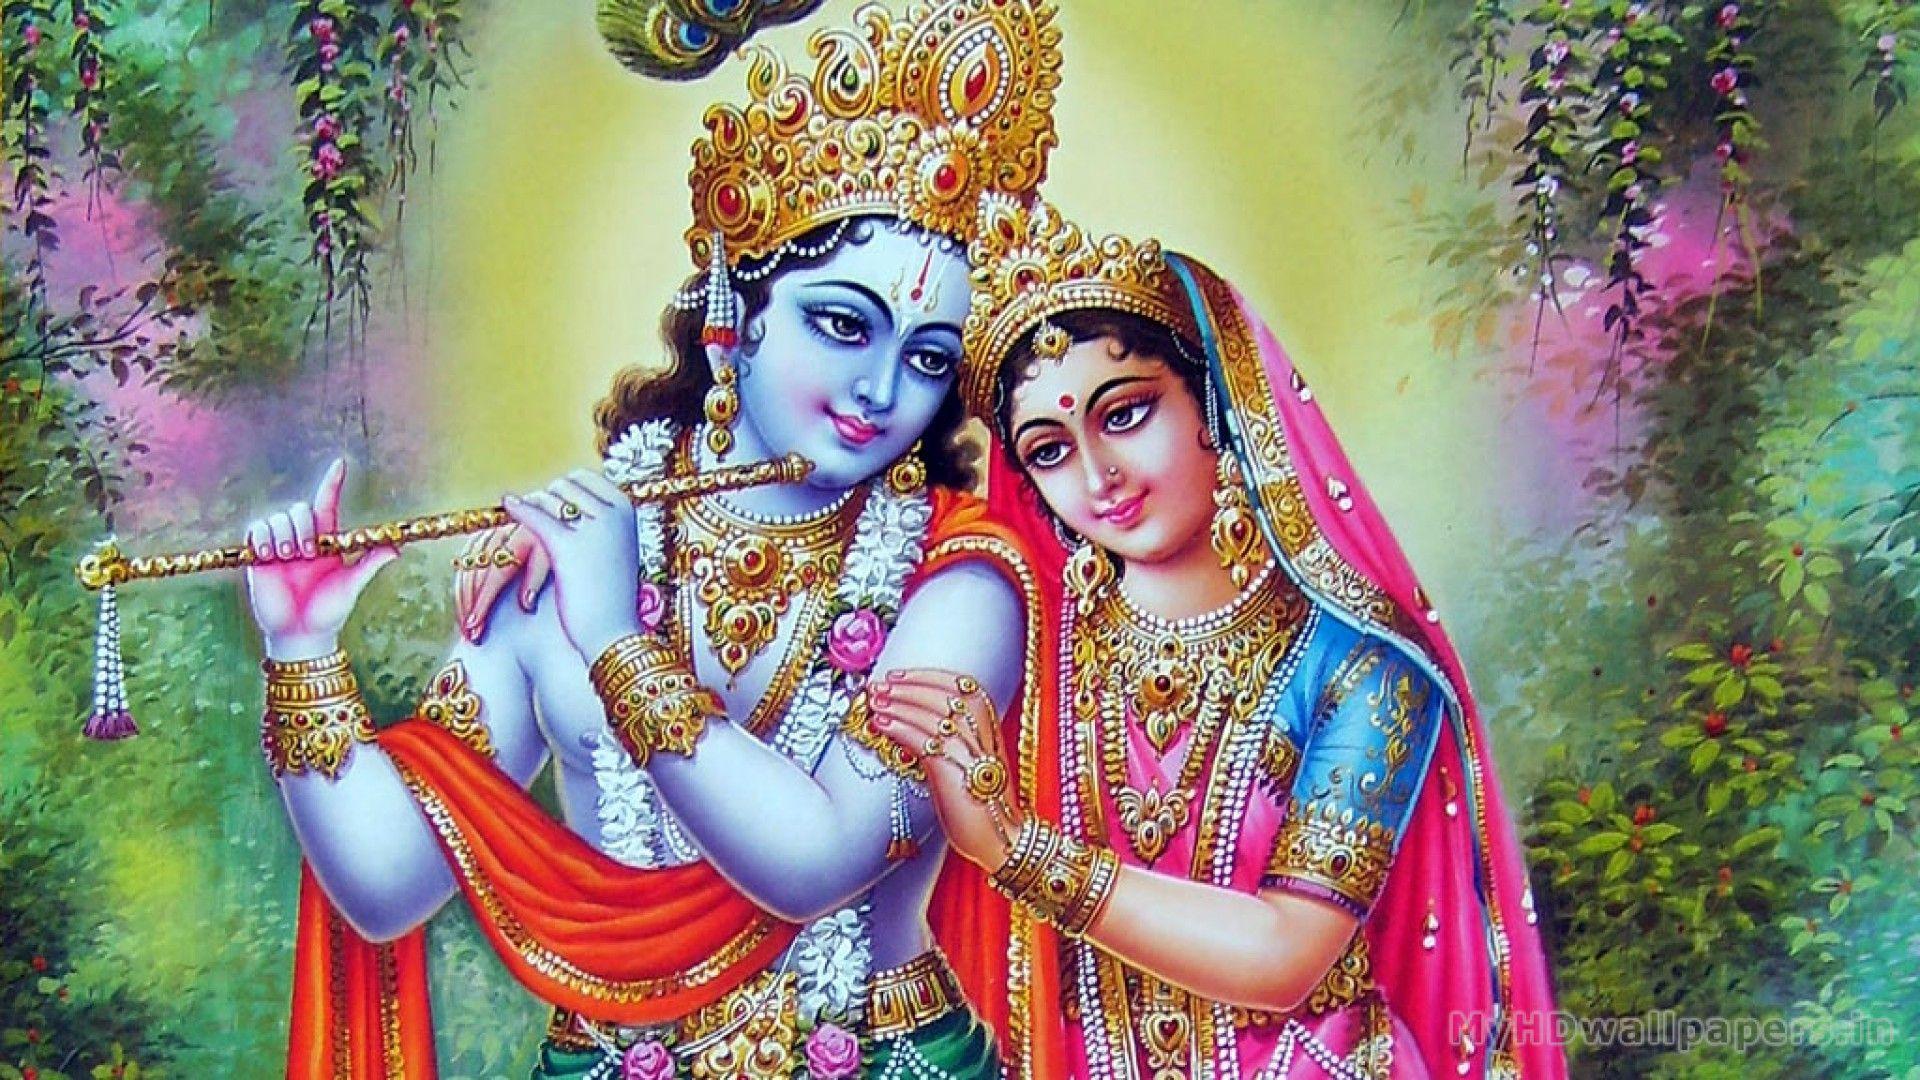 Krishna Wallpaper, photo, picture & image for desktop background